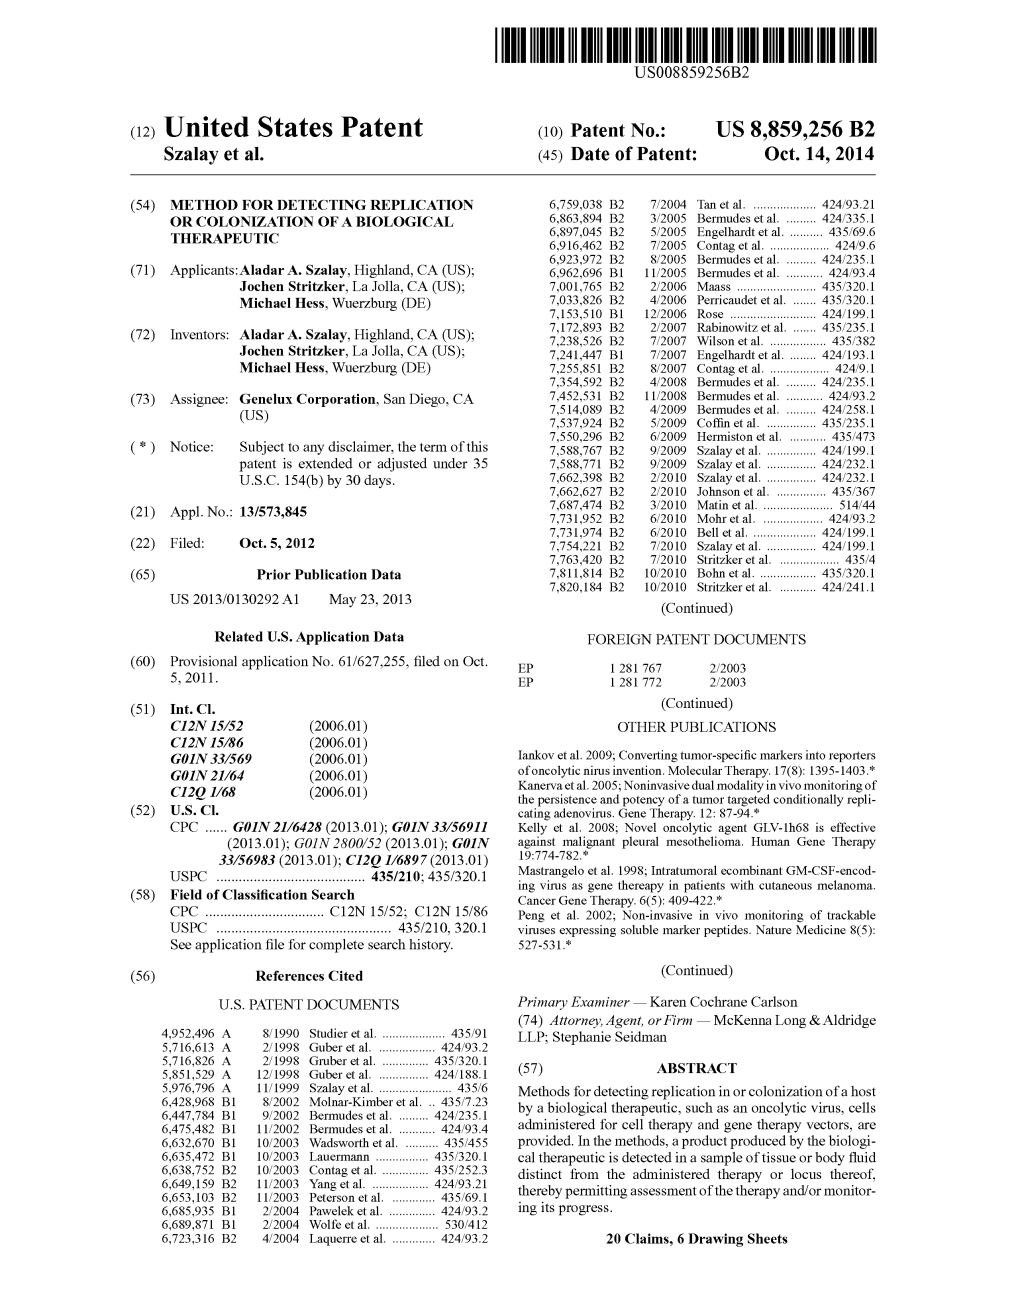 United States Patent (10) Patent No.: US 8,859,256 B2 Szalay Et Al